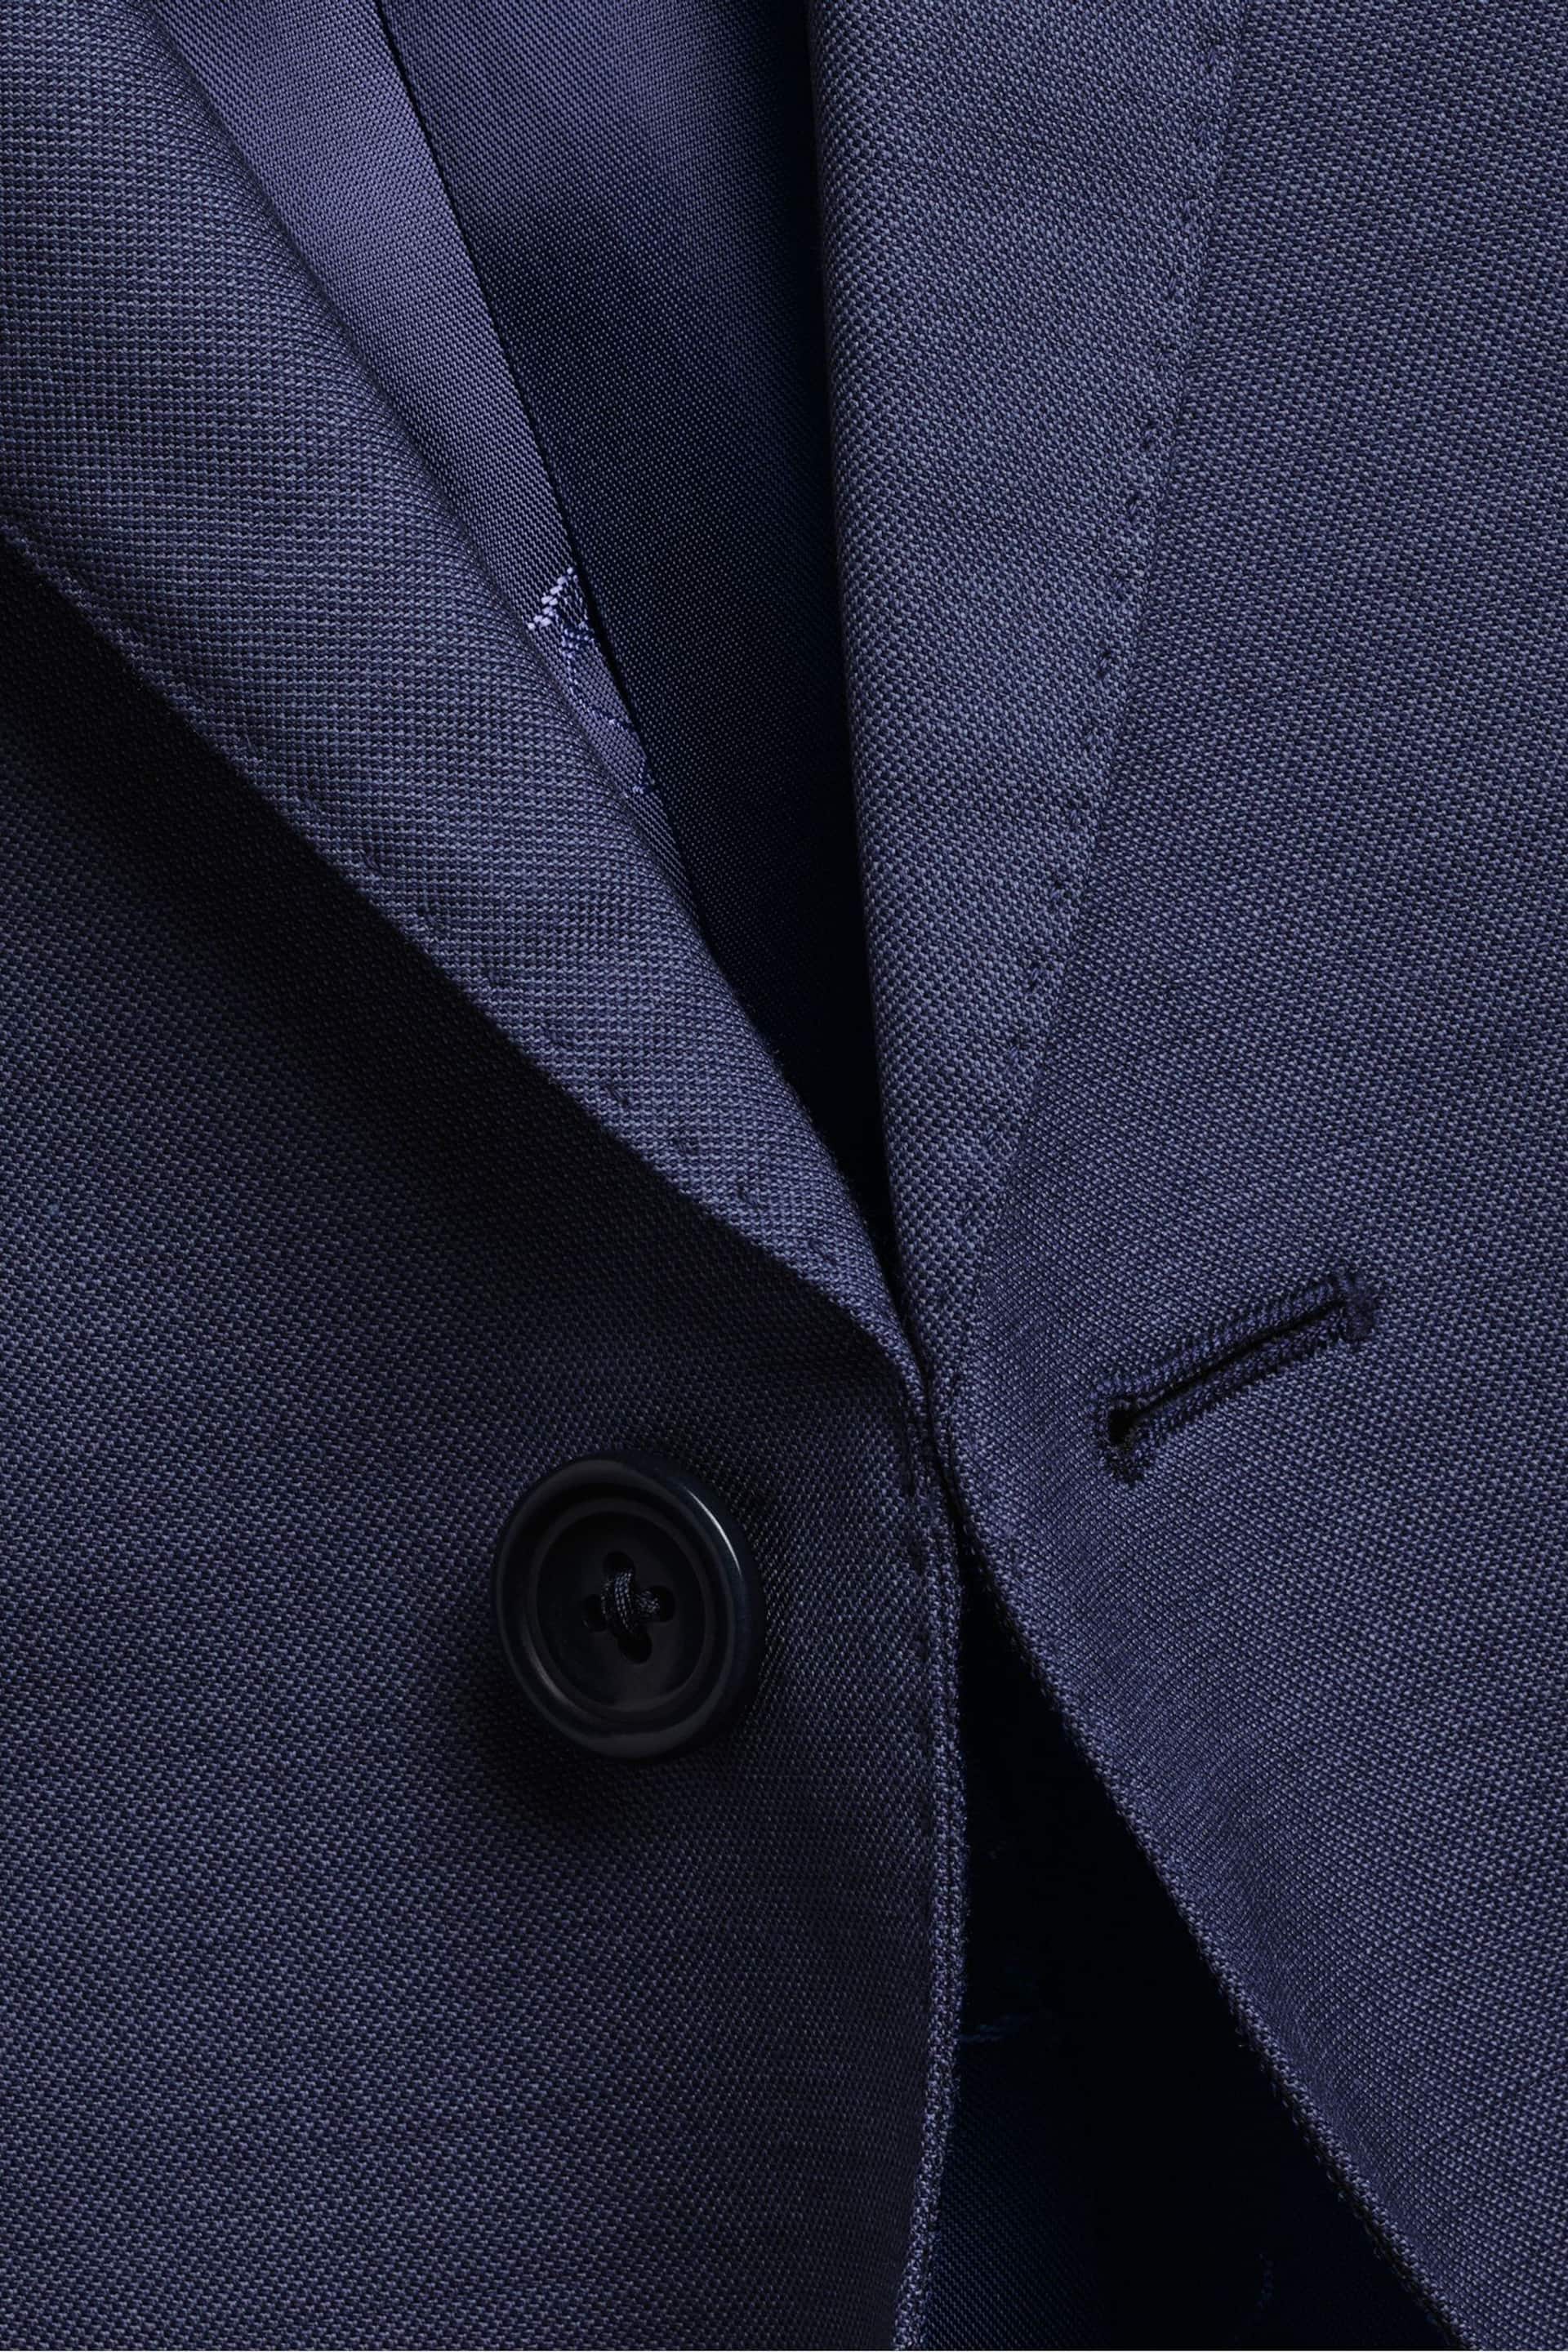 Charles Tyrwhitt Blue Slim Fit Sharkskin Ultimate Performance Suit: Jacket - Image 4 of 4